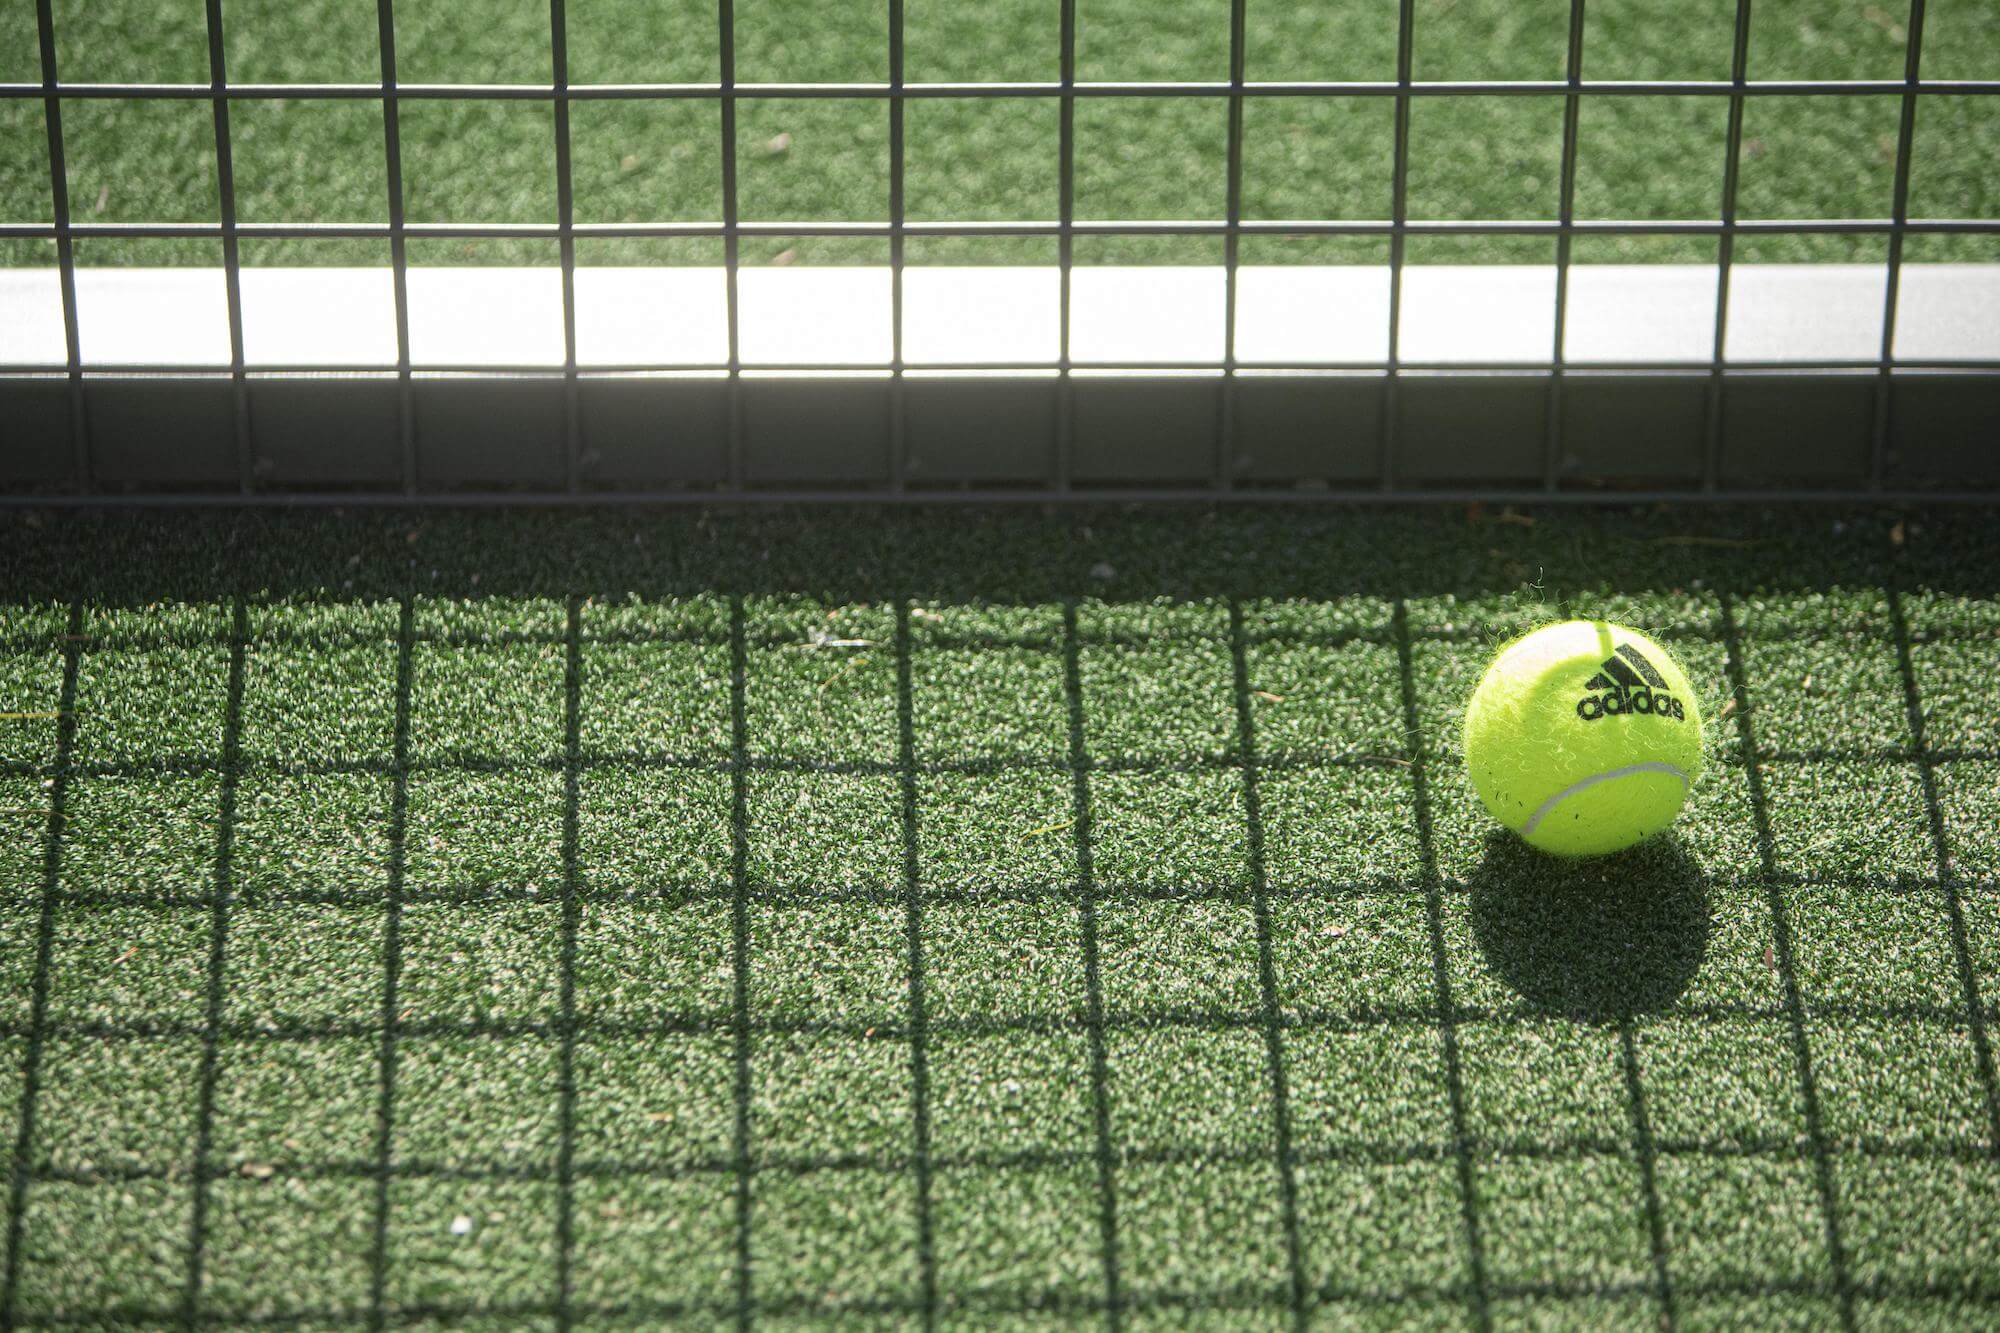 Adidas tennis ball on a padel court